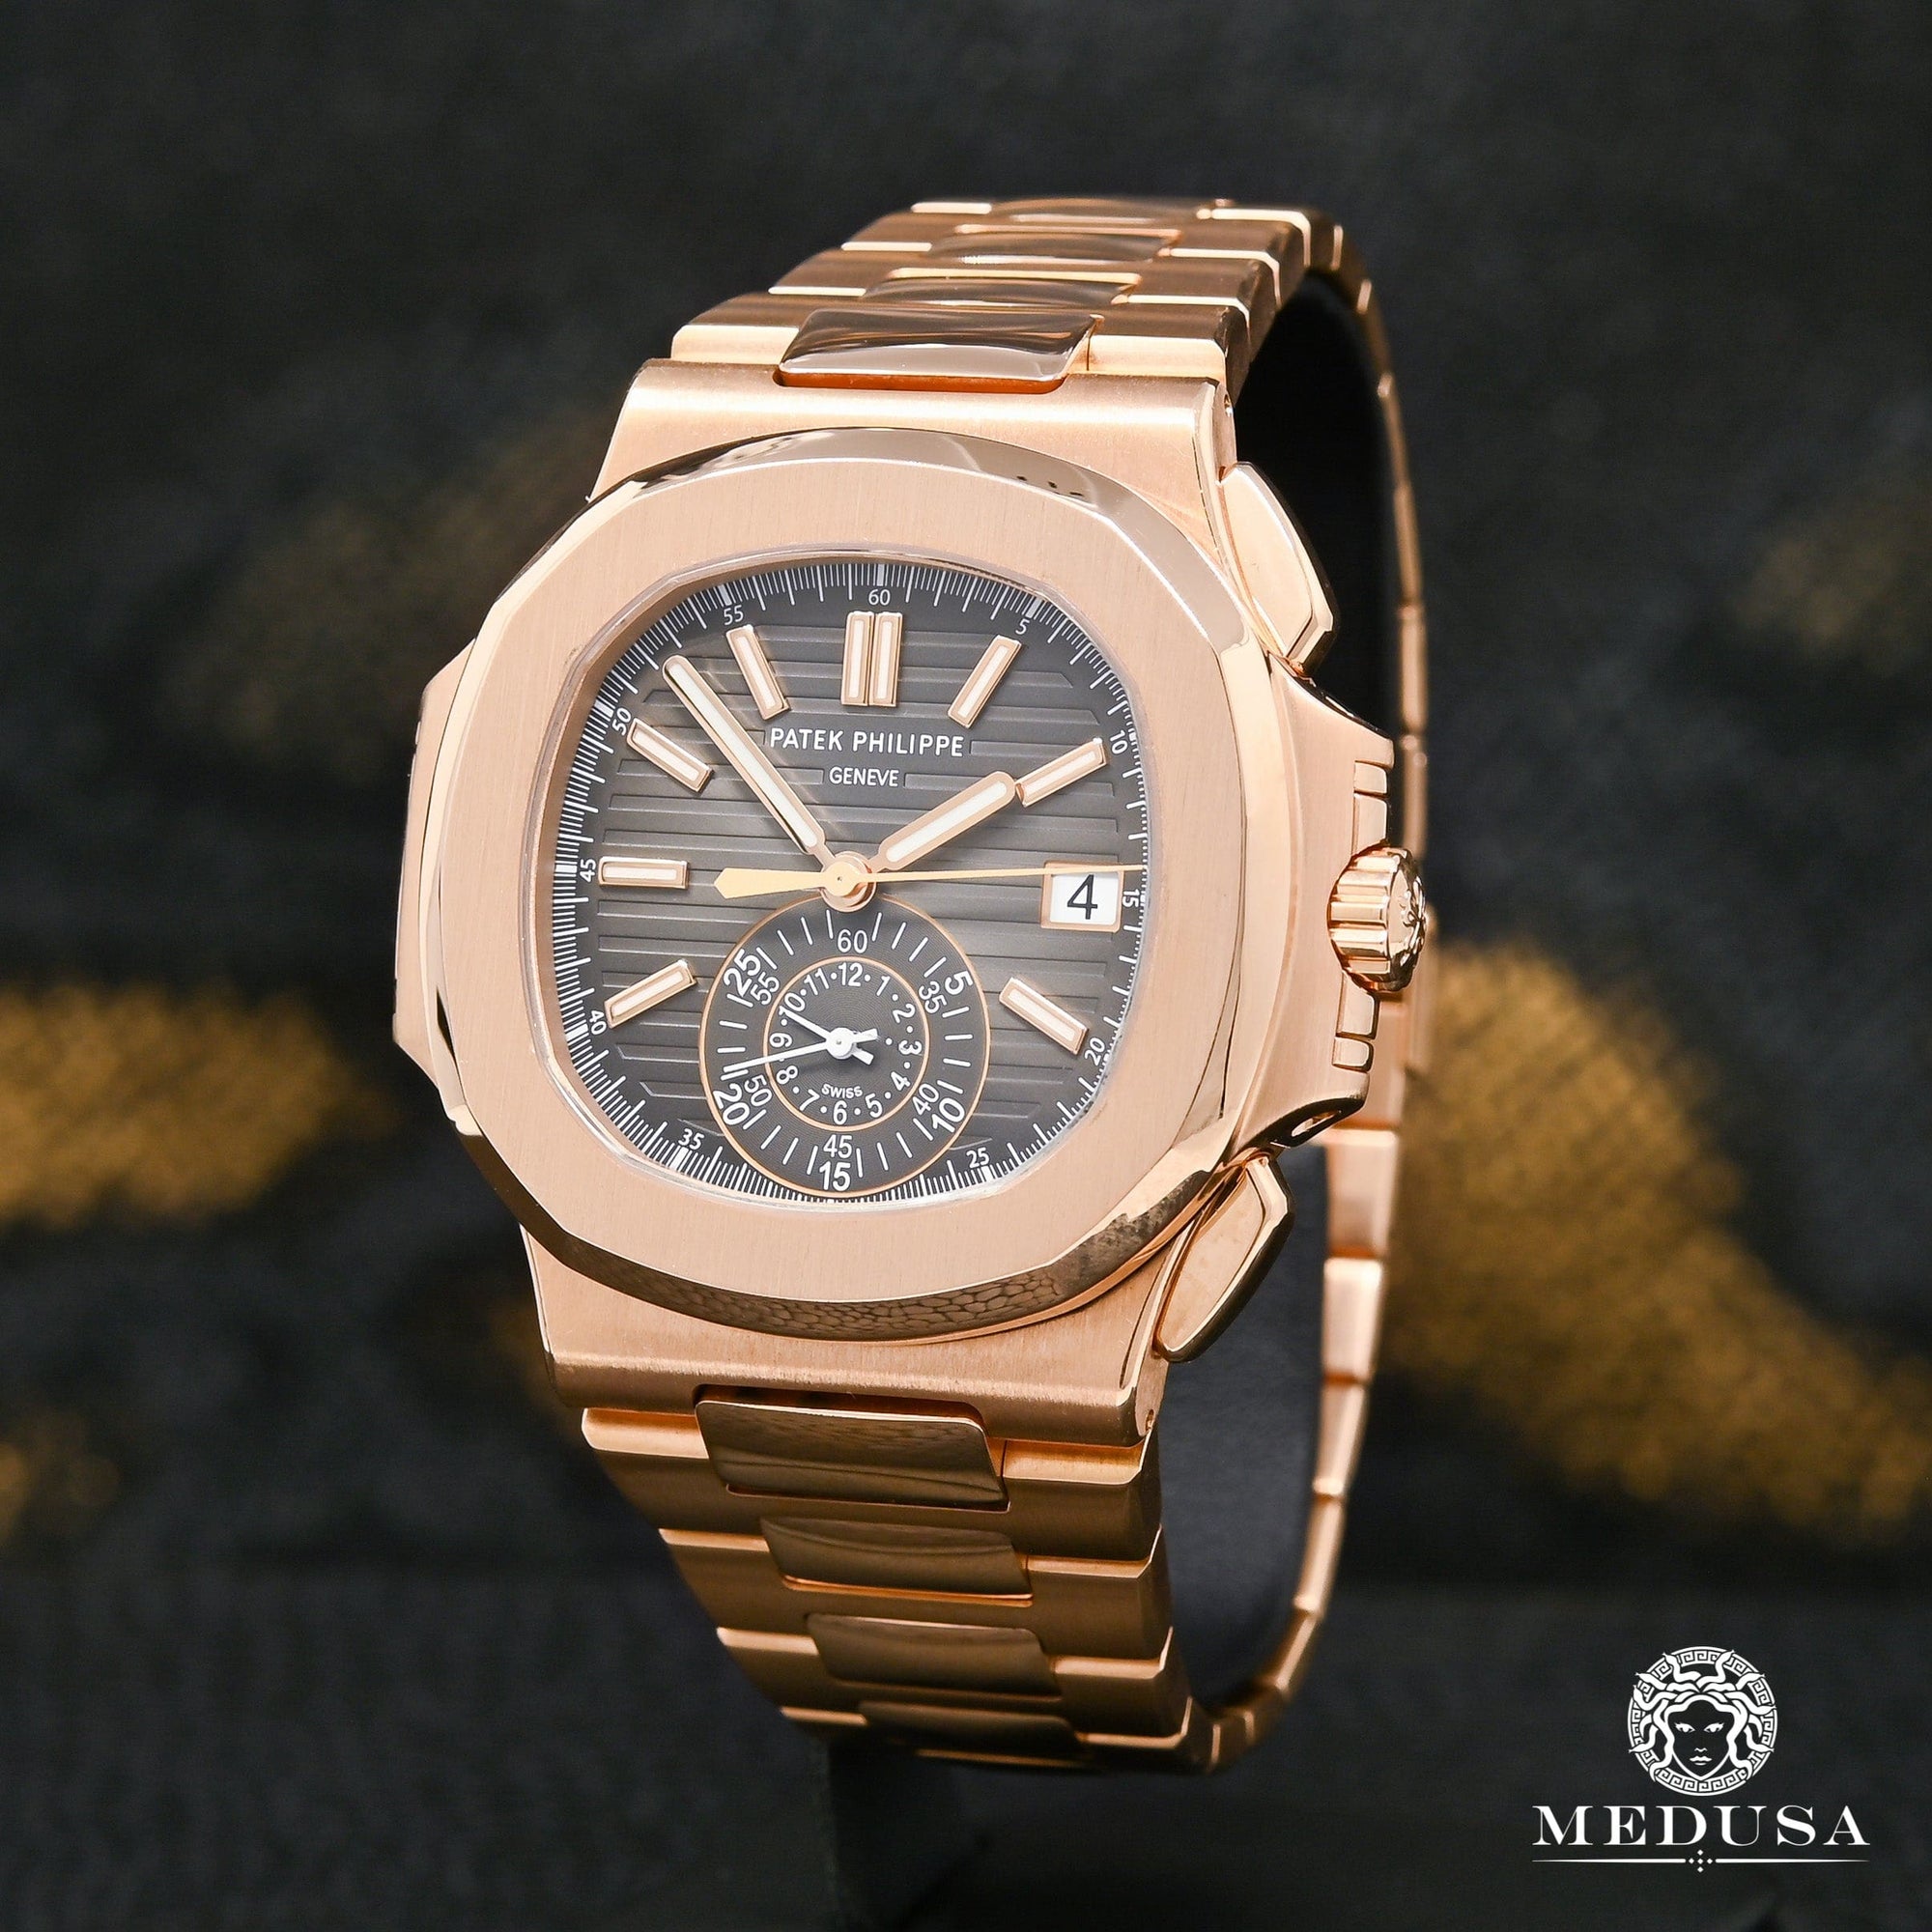 Patek Philippe watch | Patek Philippe Nautilus 41mm Men's Watch - 5980R Rose Gold